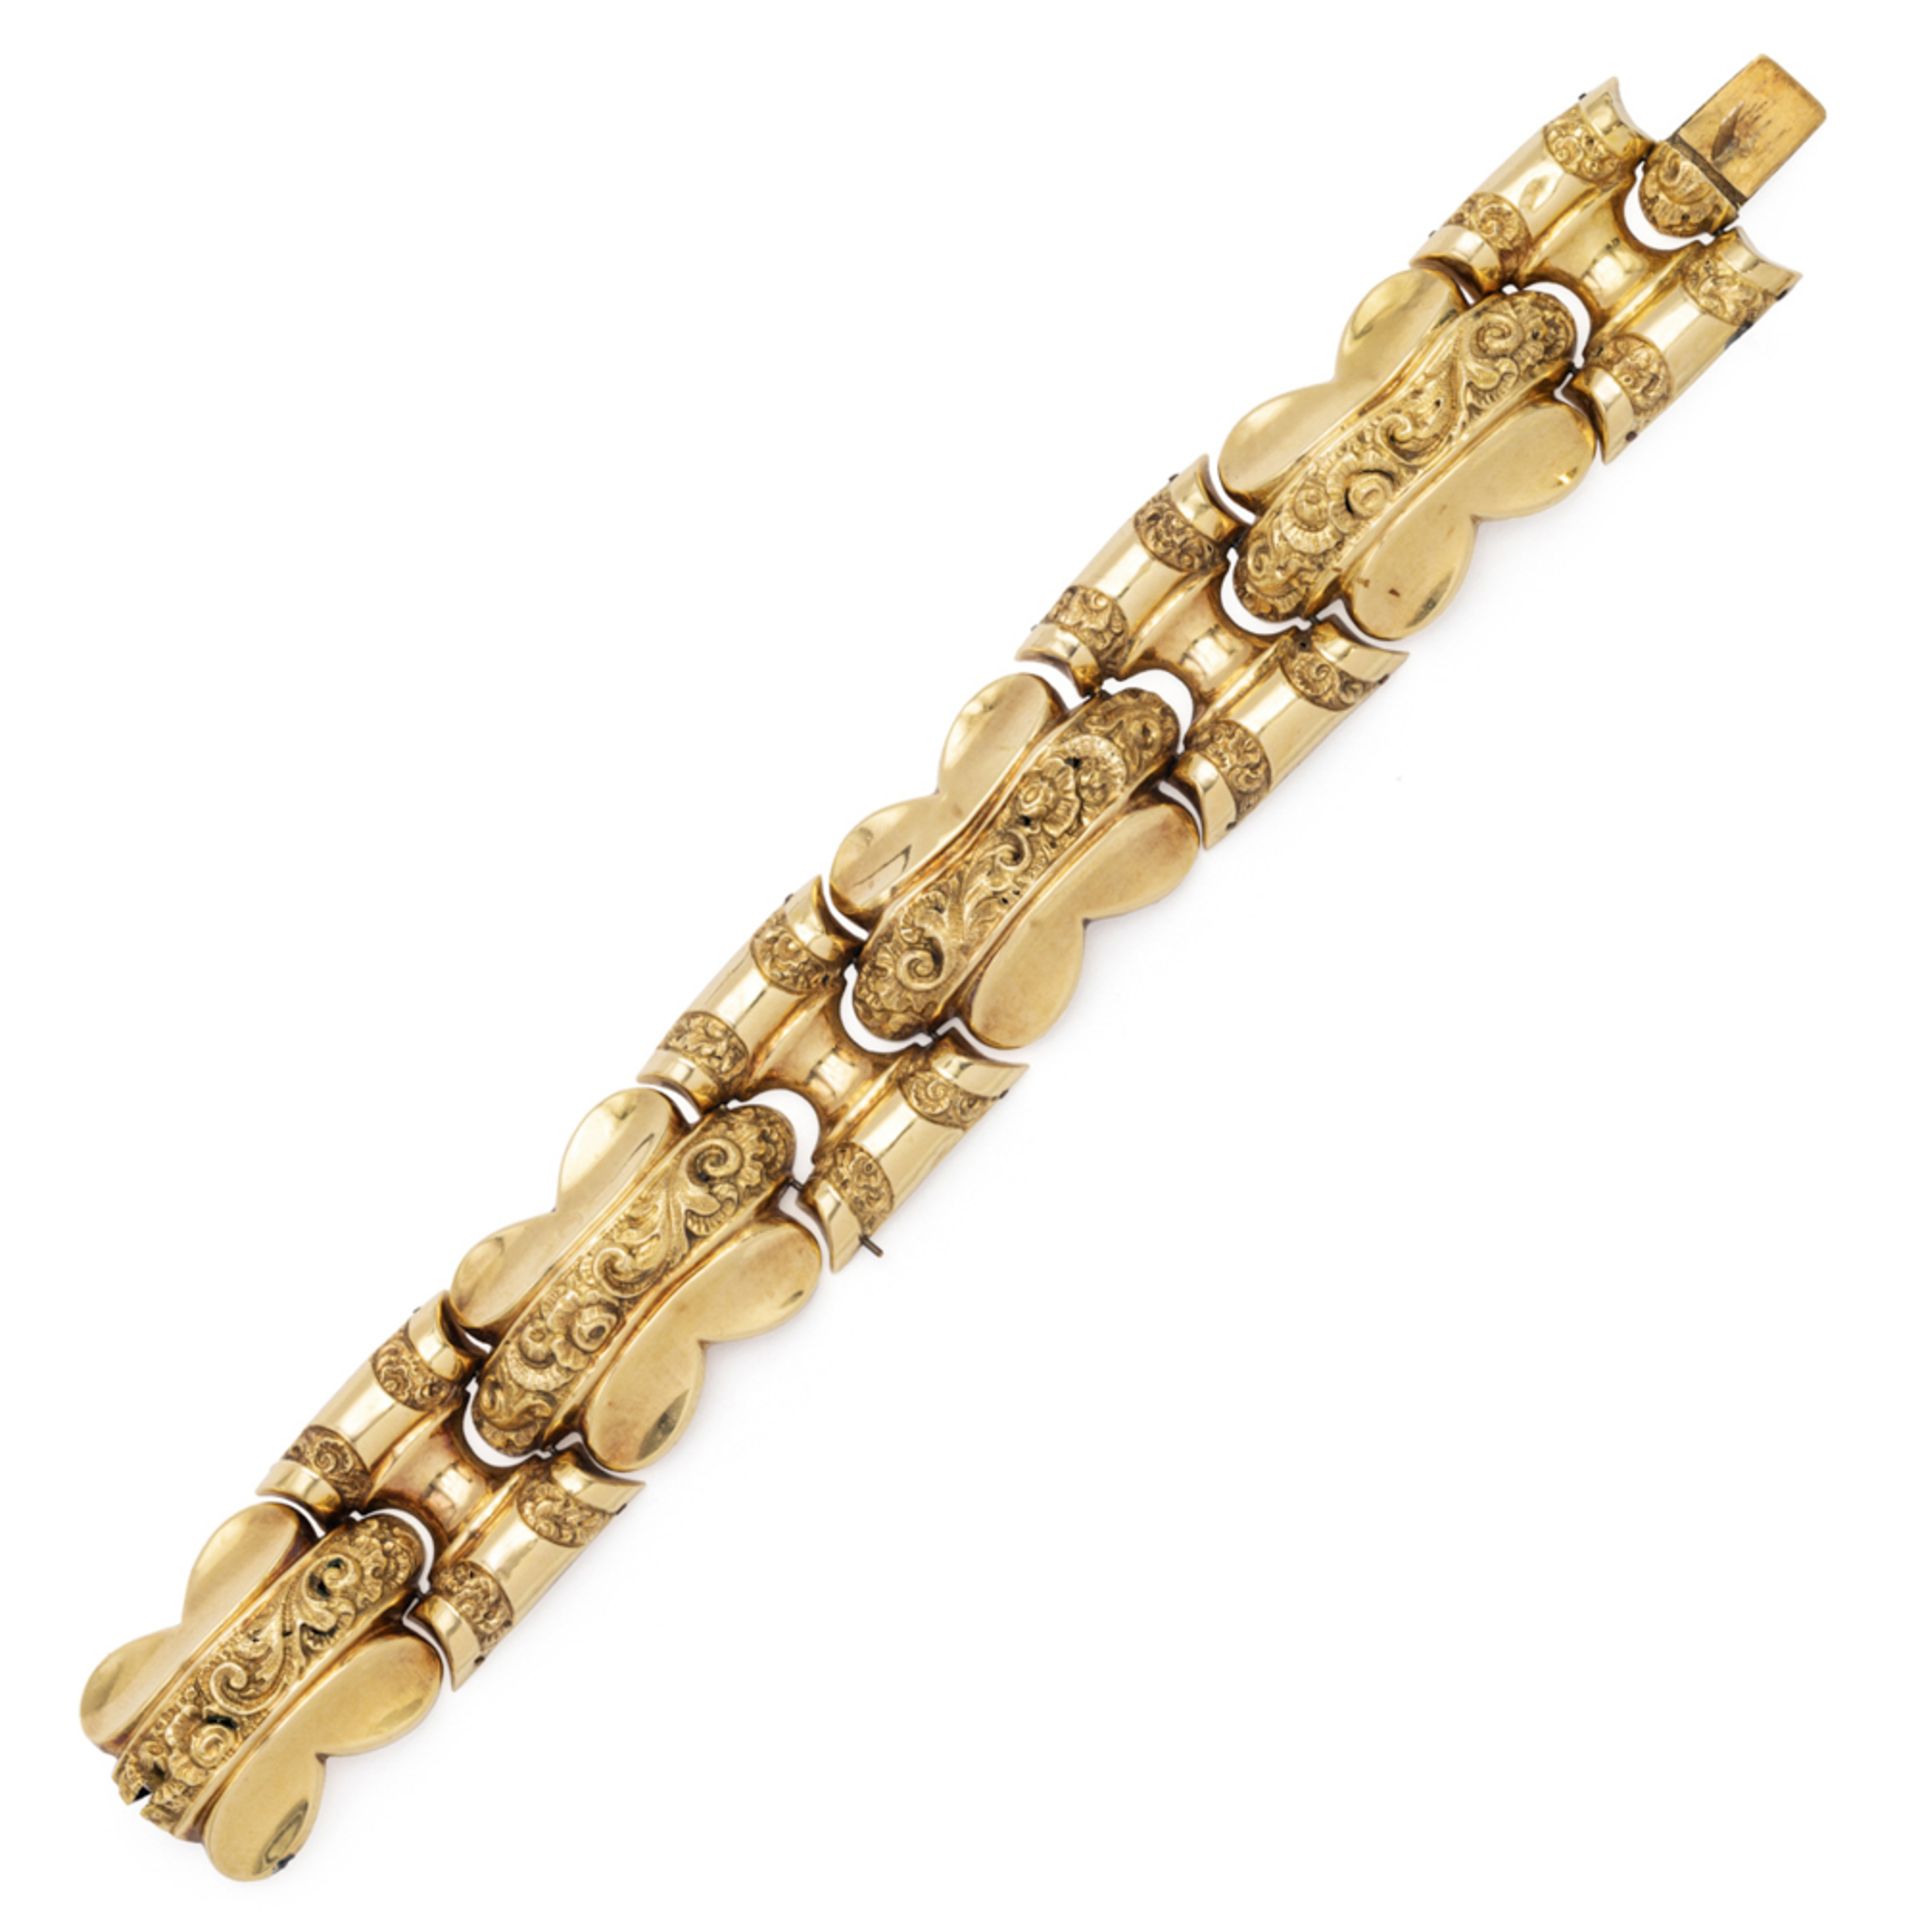 18kt yellow gold Bourbon bracelet